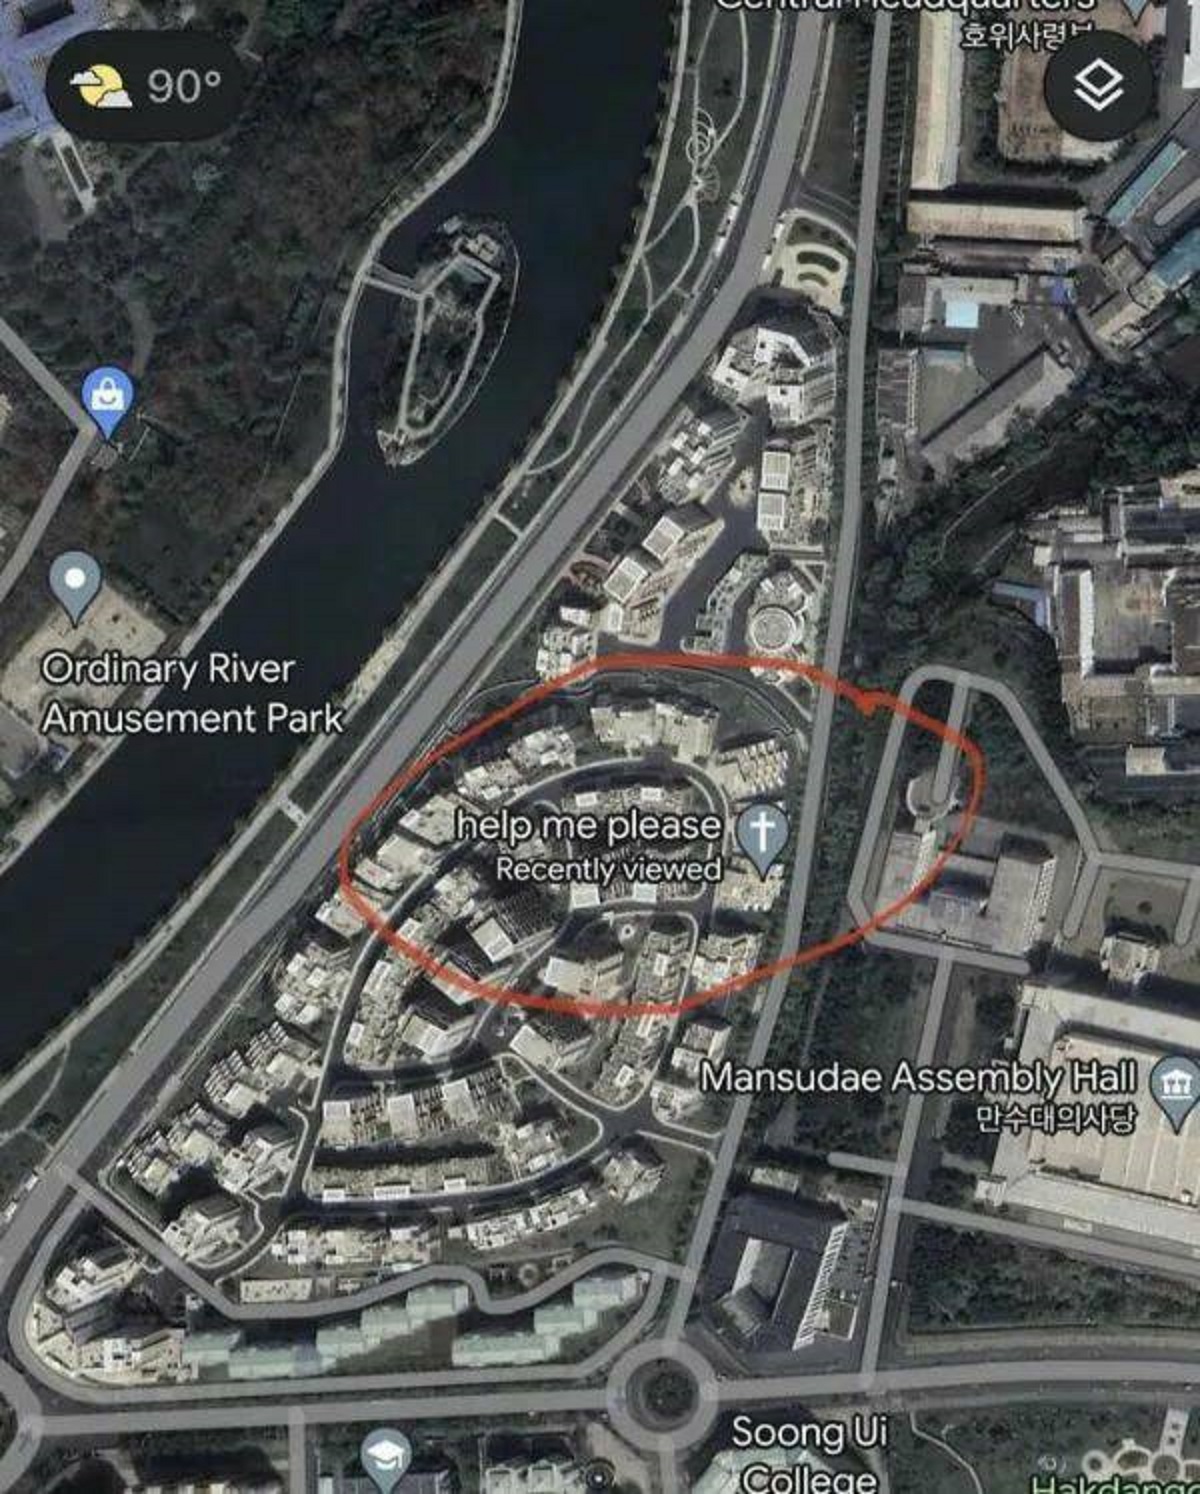 north korea google maps reddit - 90 Ordinary River Amusement Park help me please Recently viewed Mansudae Assembly Hall Soong Ui College Hakdanar